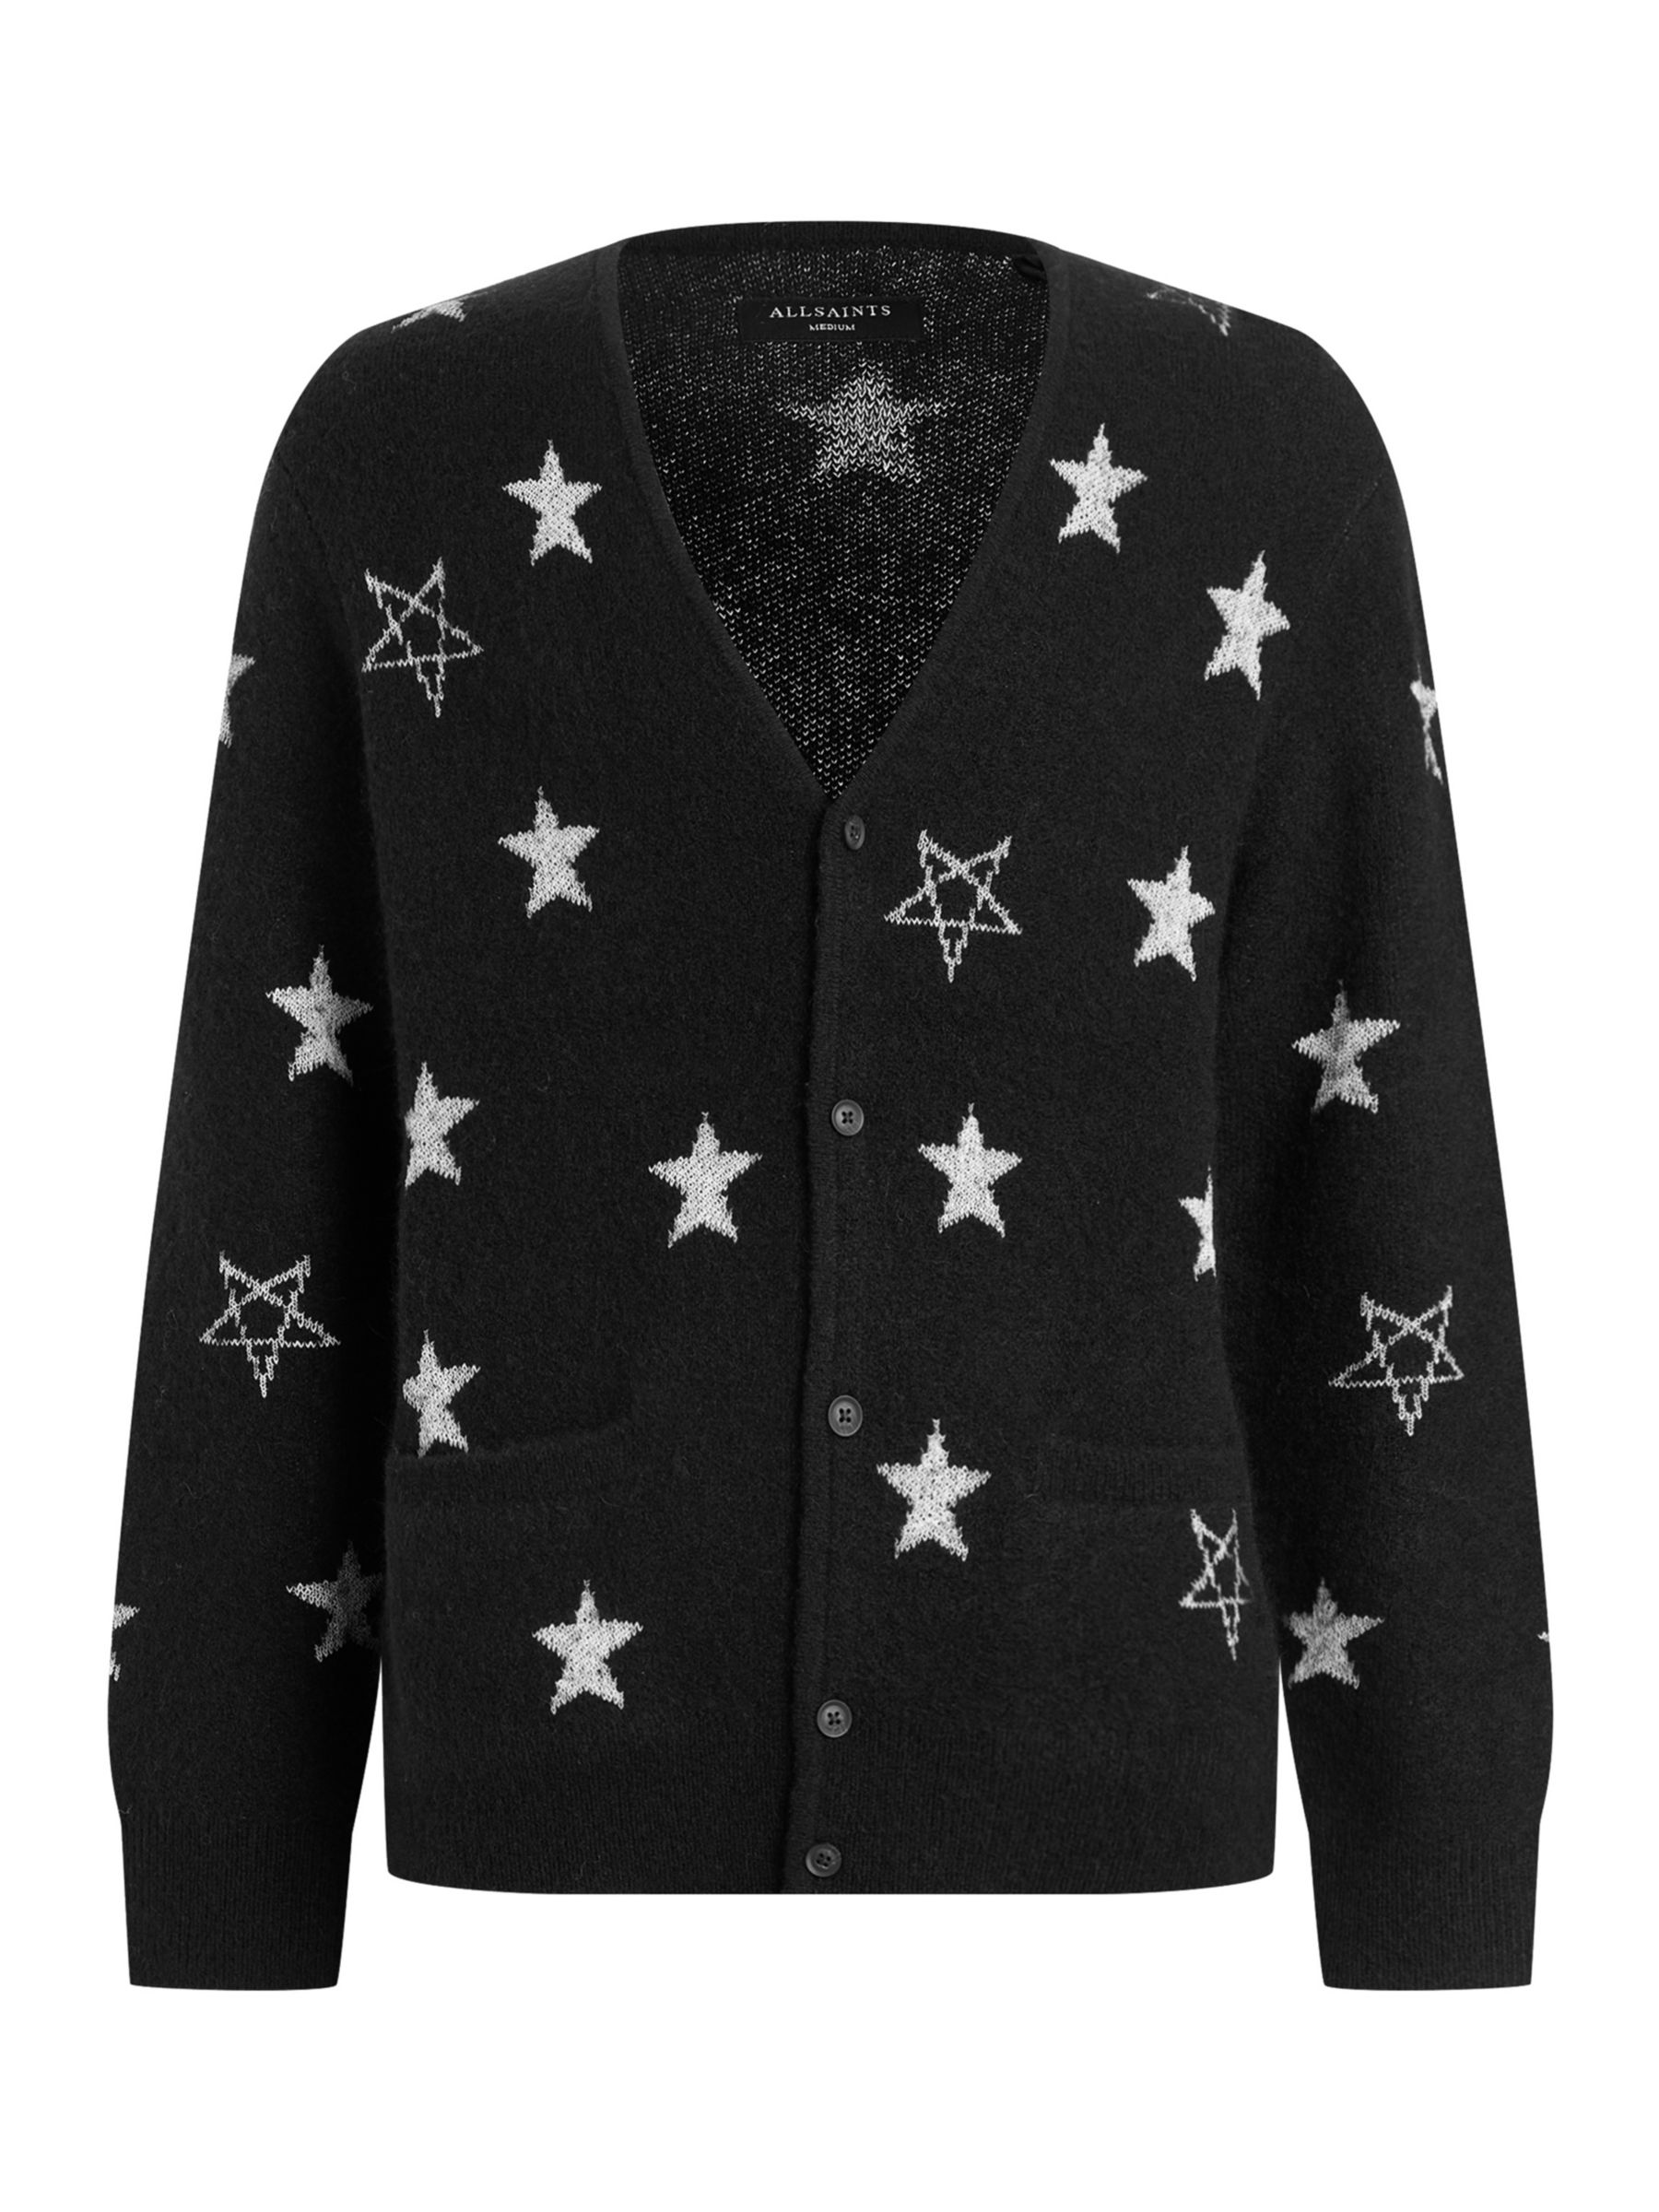 AllSaints Odyssey Star Print Wool Blend Relaxed Fit Cardigan, Black ...